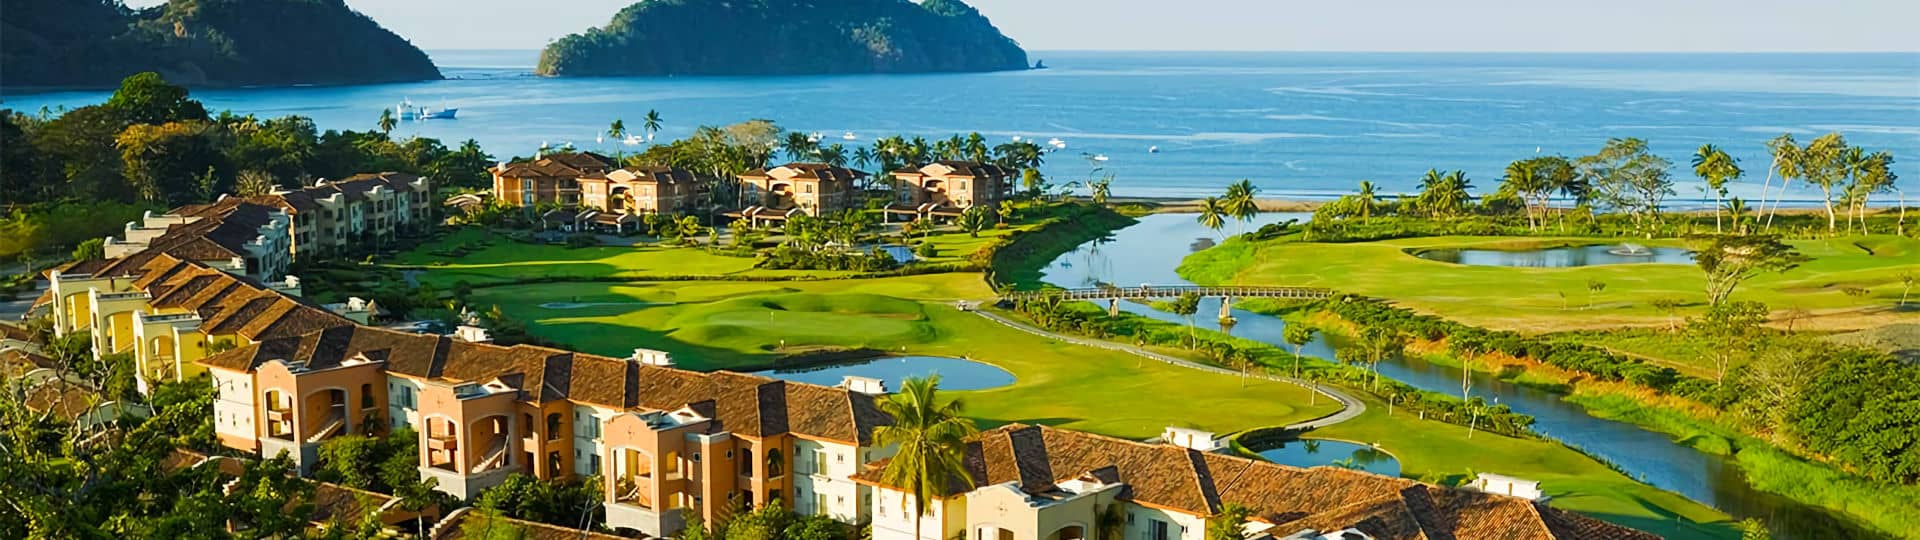 Costa Rica Fishing Resorts & Luxury Lodgings (Jaco Beach & Los Suenos)